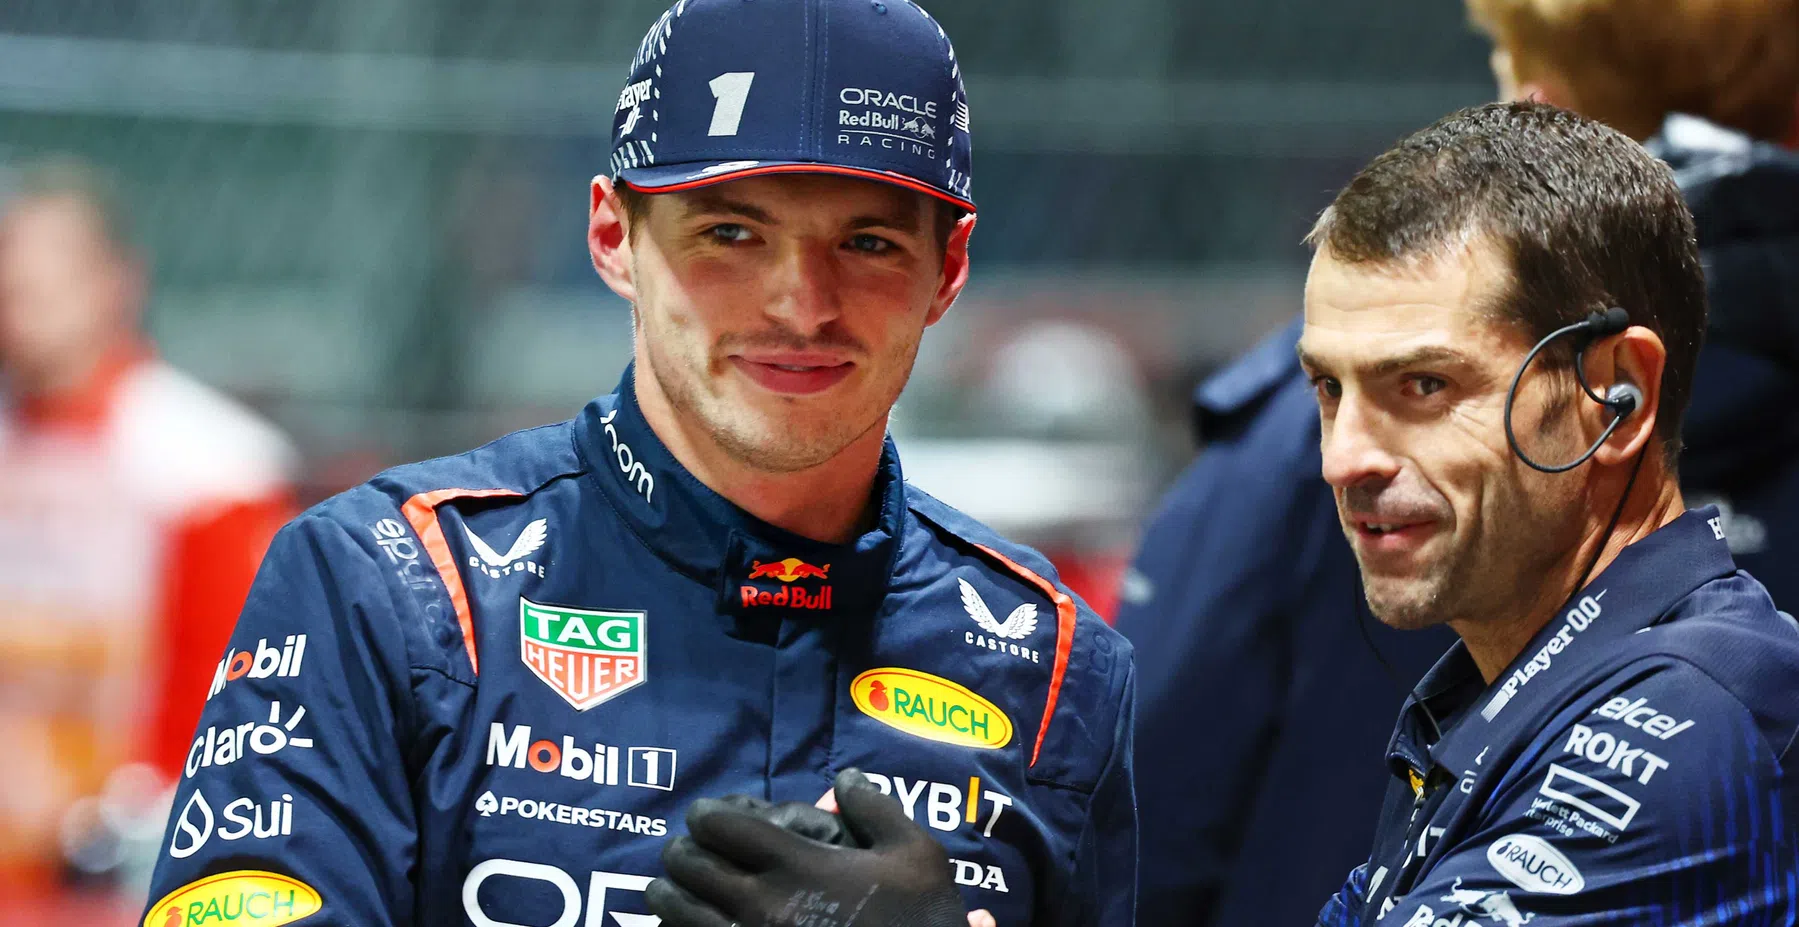 Verstappen reacts to win in thrilling Las Vegas GP